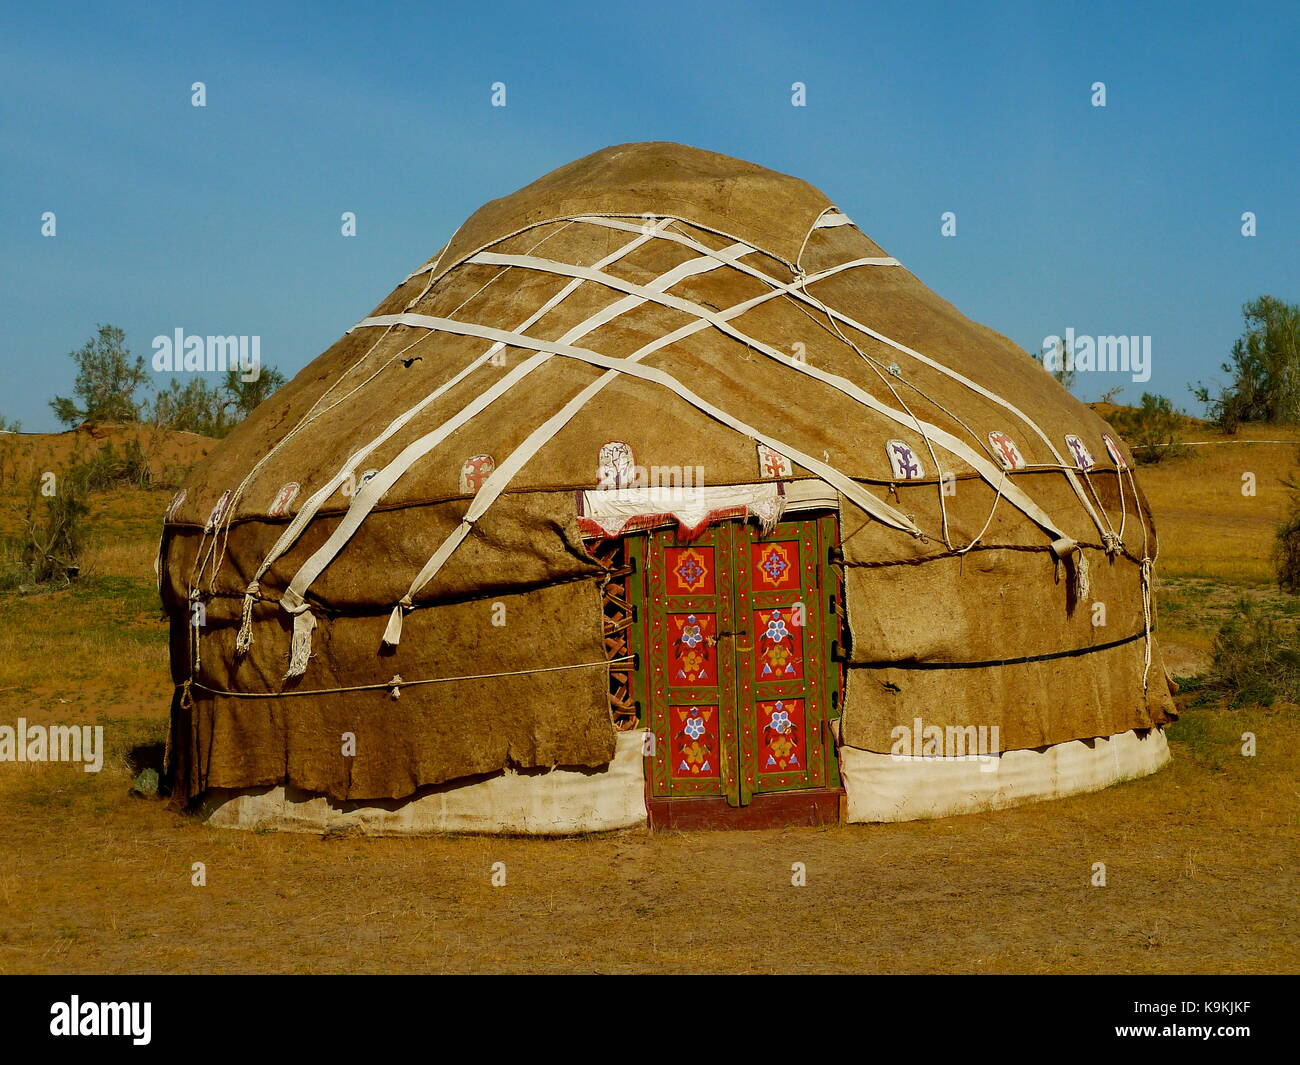 Die jurte in Usbekistan Stockfotografie - Alamy